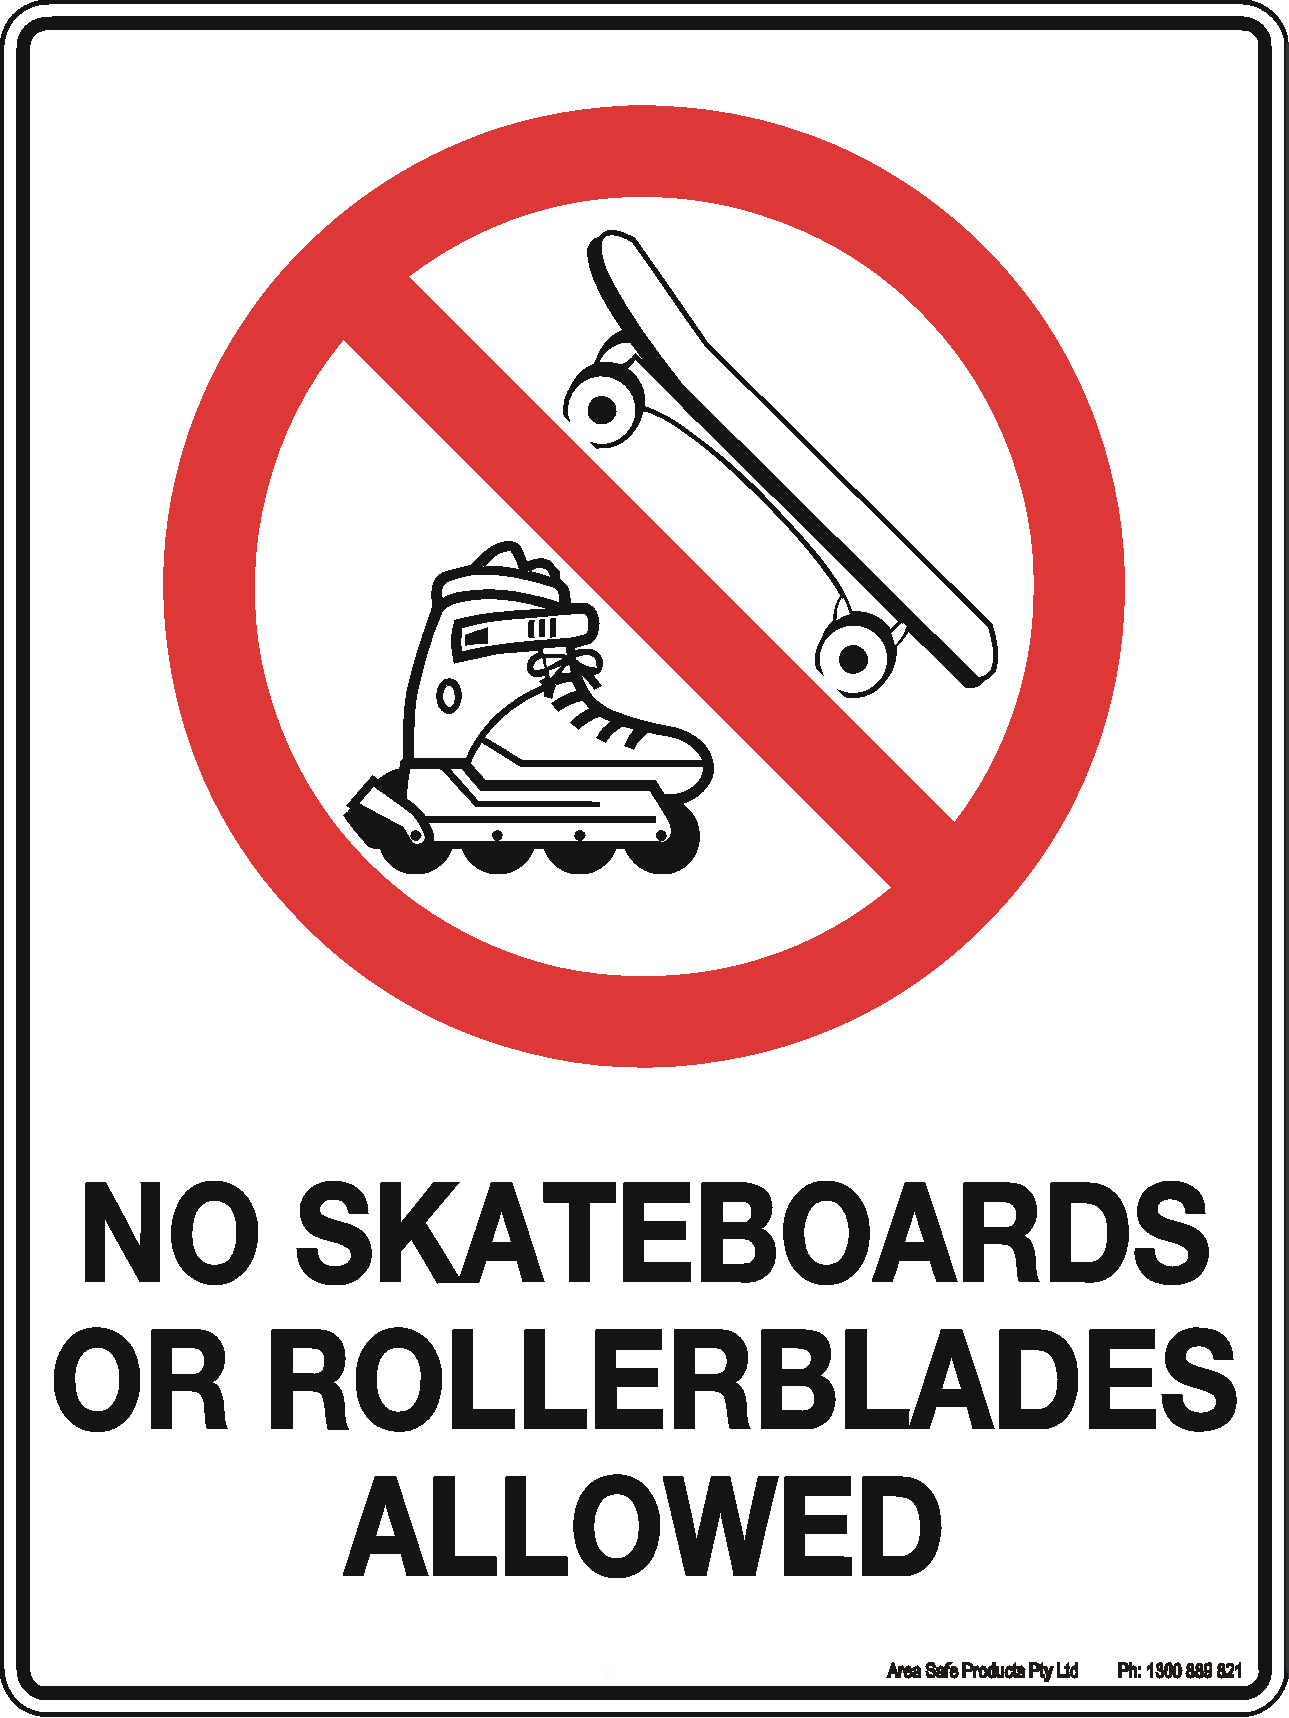 No Skateboards or Rollerblades Allowed Sign